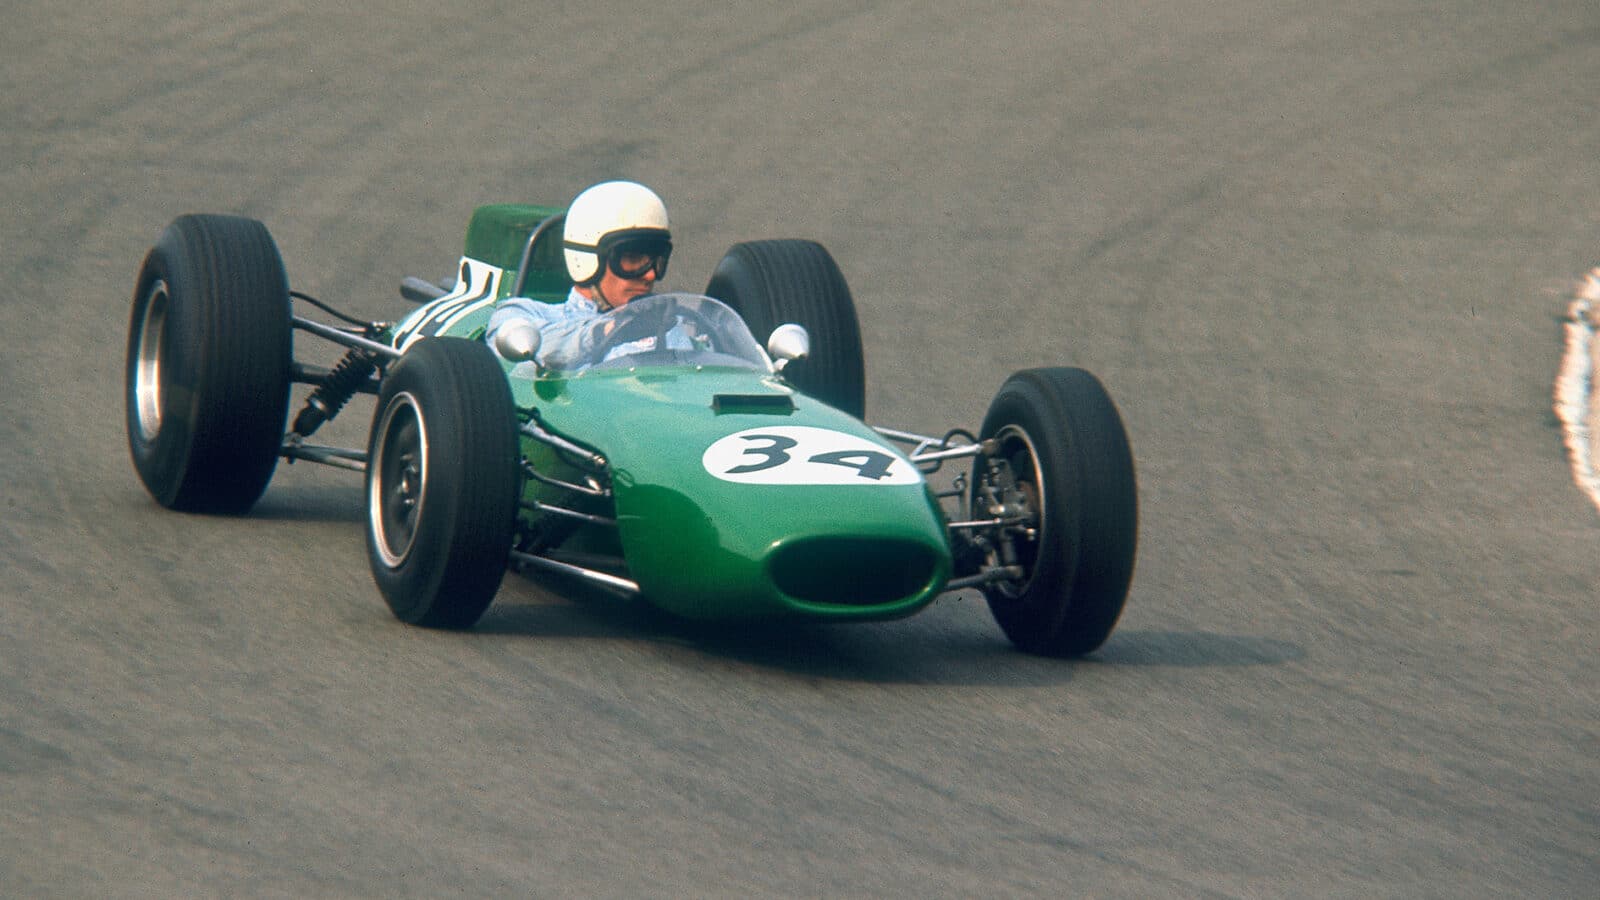 Brabham Climax of Bob Anderson at 1964 Dutch Grand Prix at Zandvoort